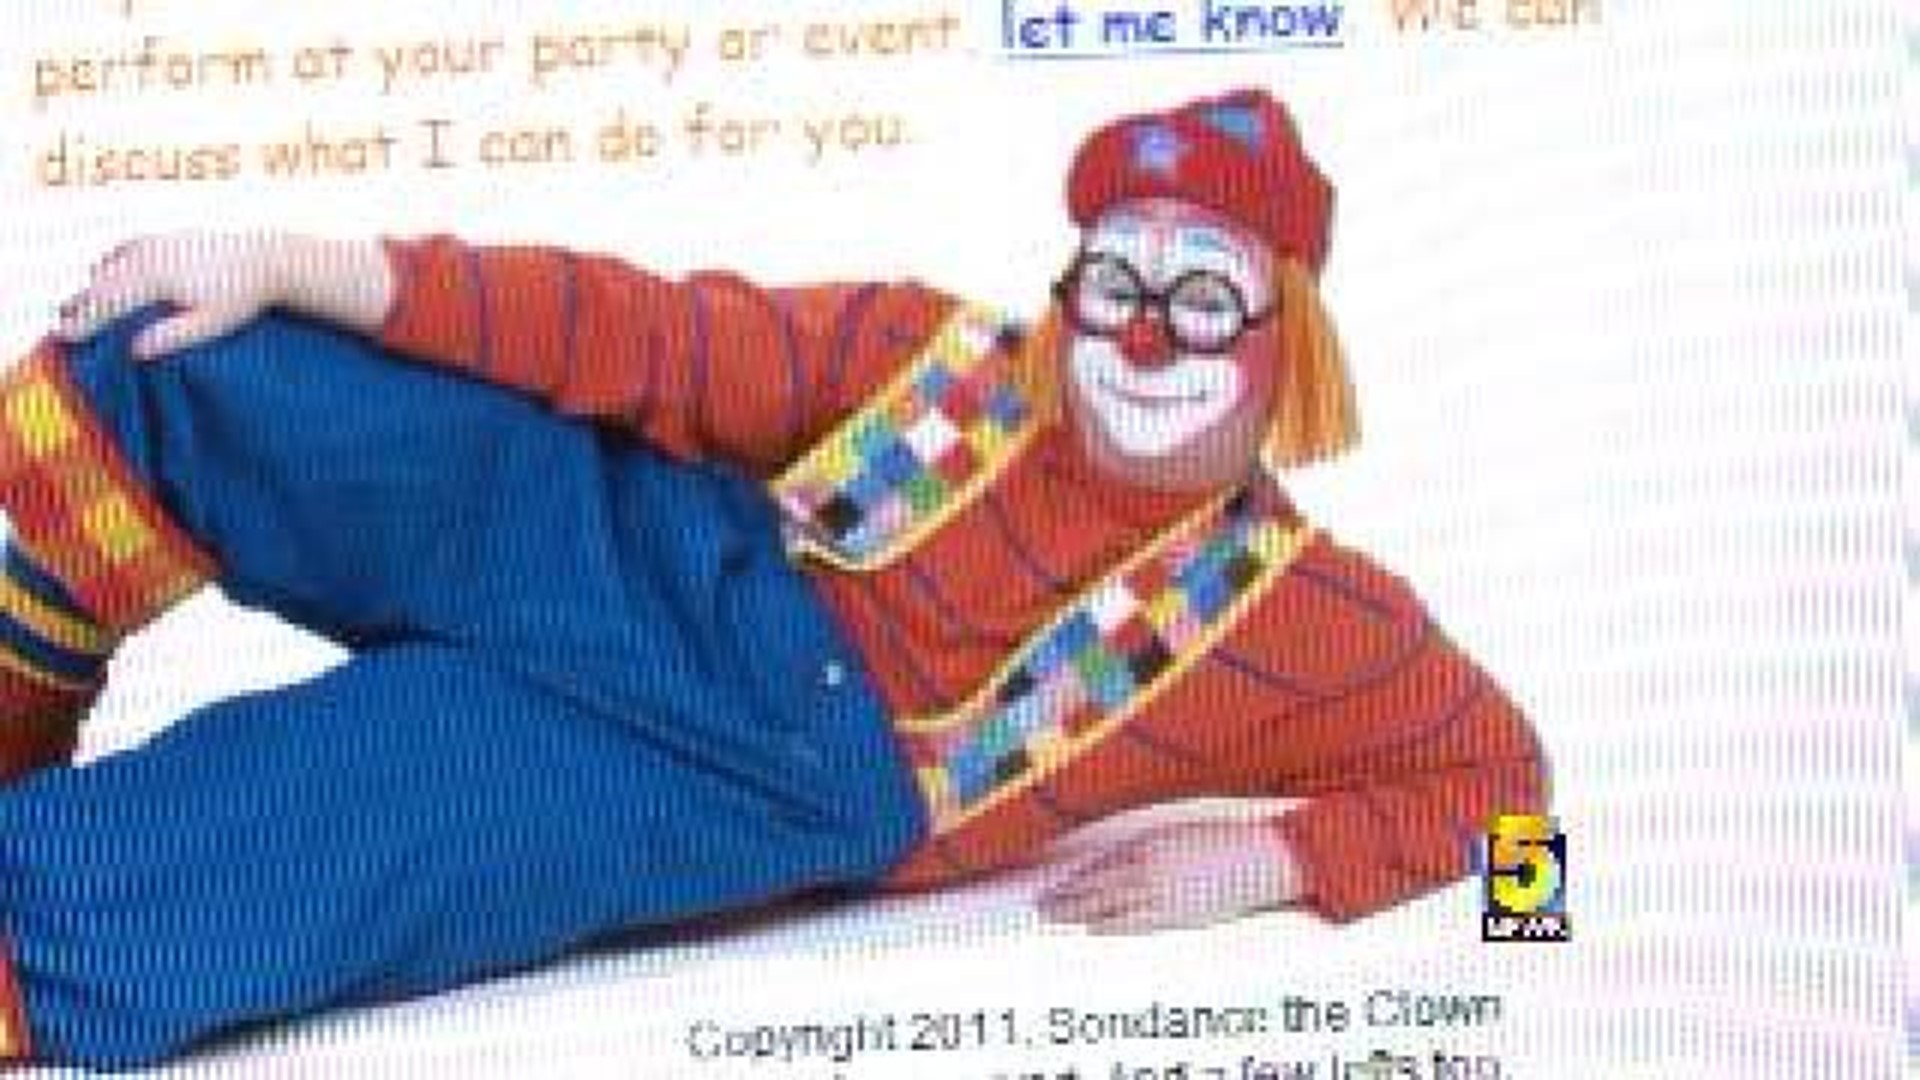 Circus Clown Porn - Sondance The Clown Pleads Guilty To Child Porn Charge | 5newsonline.com